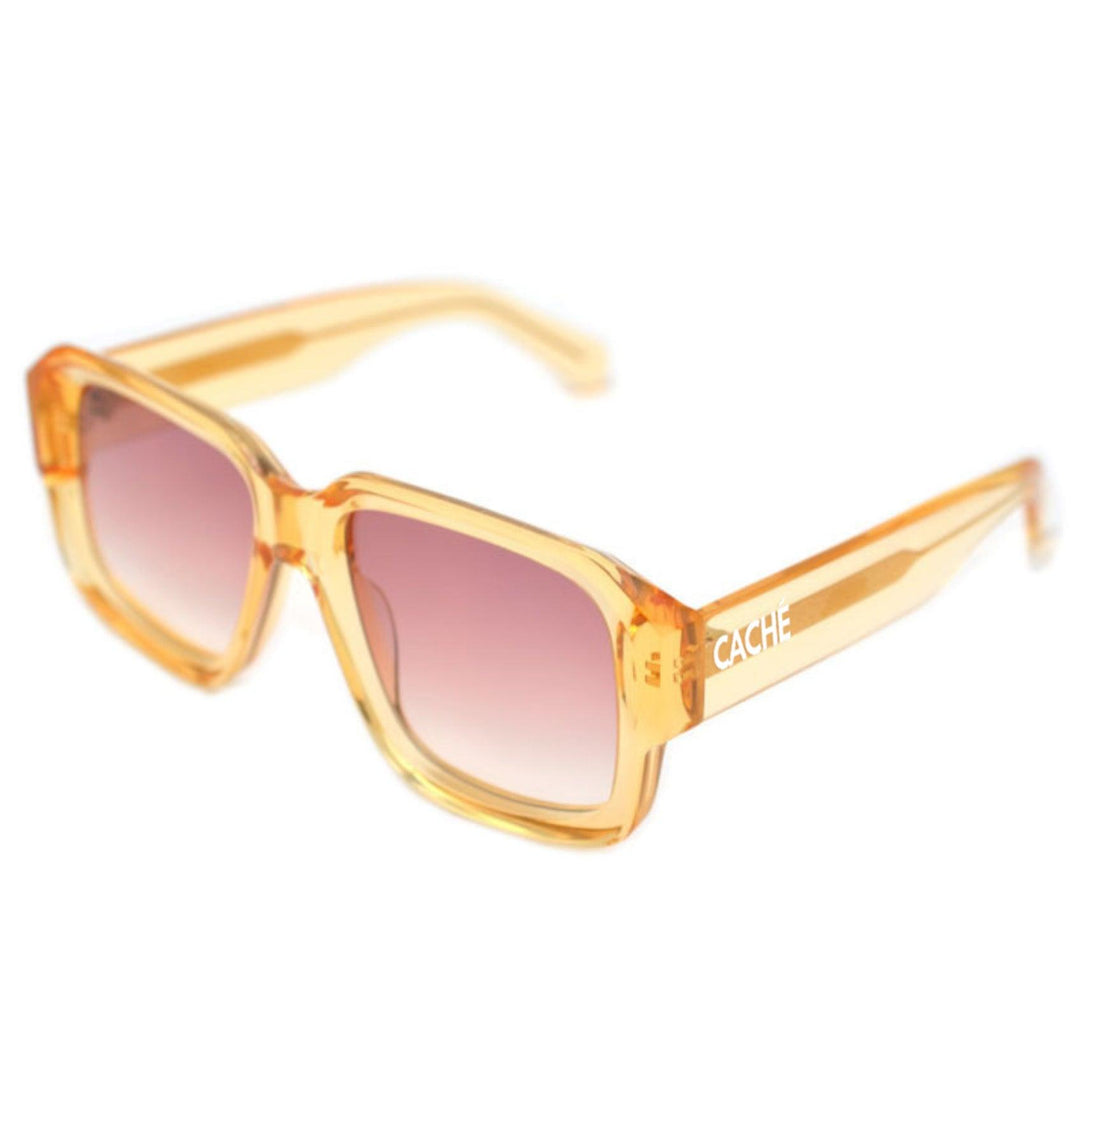 Majesty - Polarized Sunglasses